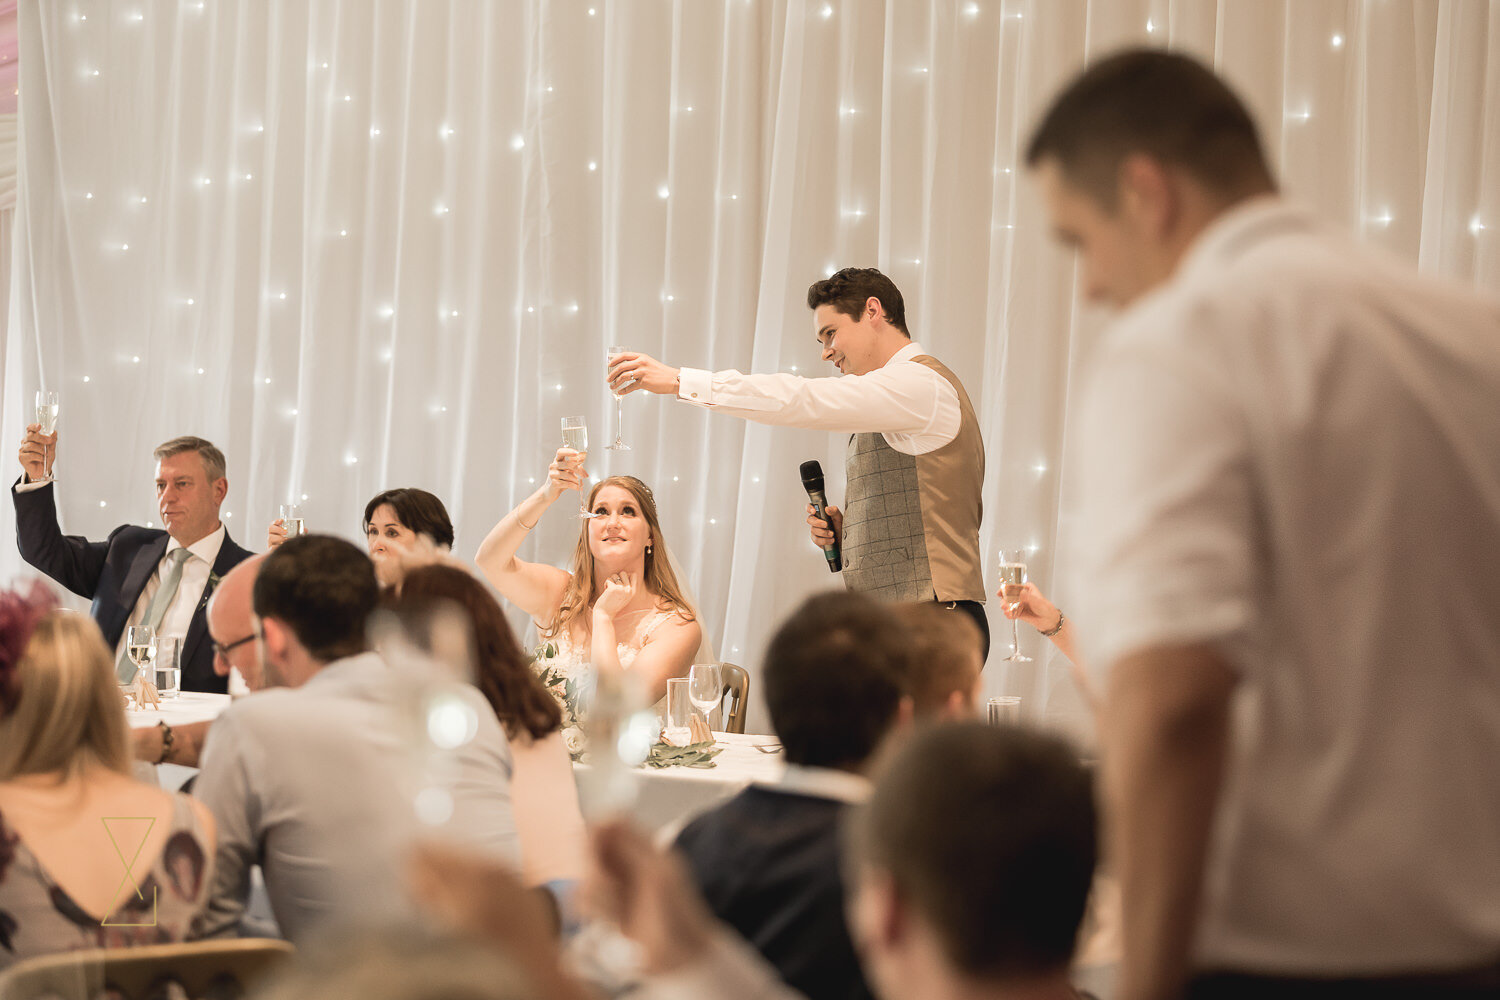 Groom-giving-wedding-speech-toast